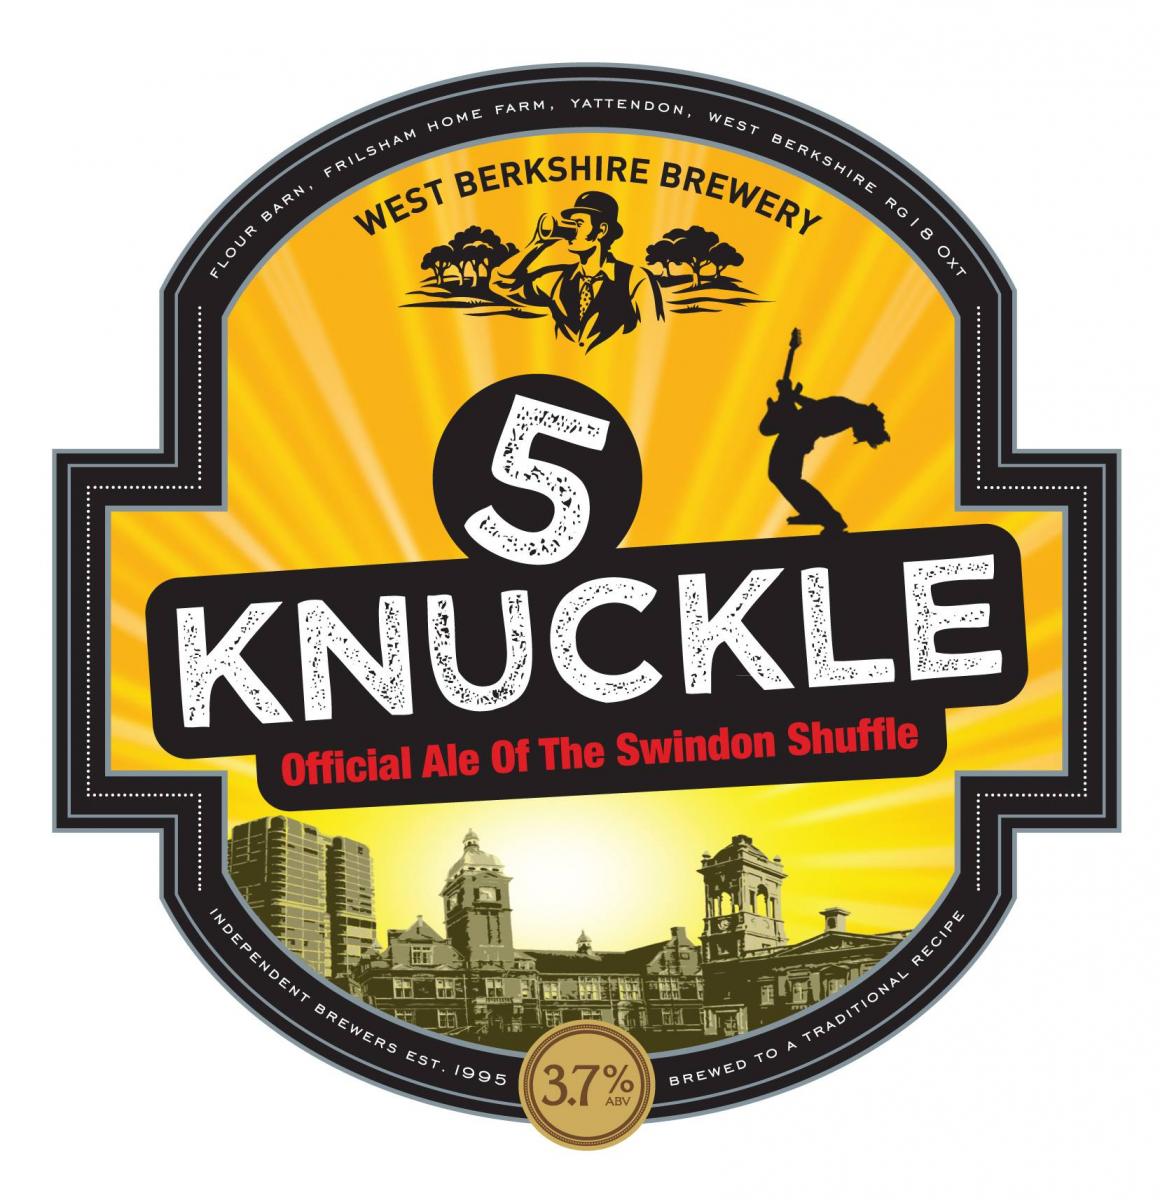 Swindon Shuffle gets its own '5 Knuckle' ale